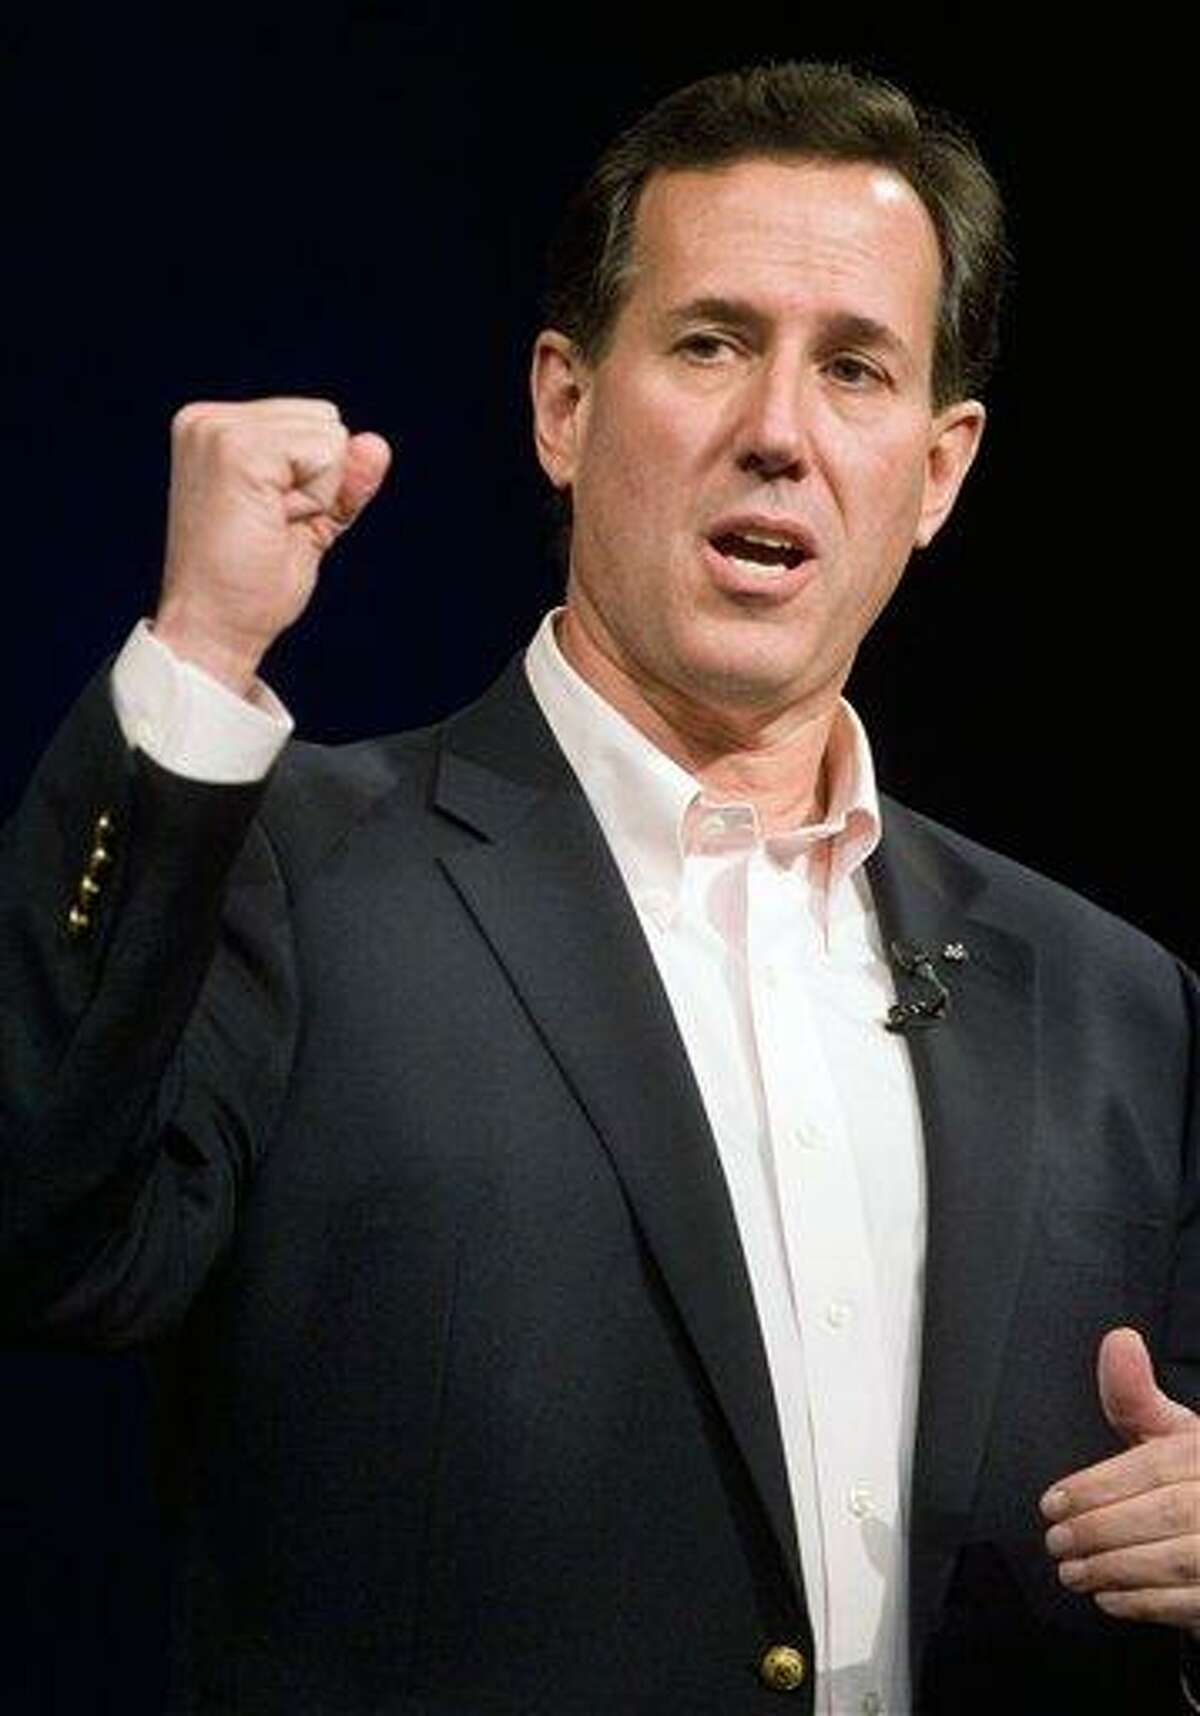 Republican presidential candidate and former U.S. Senator Rick Santorum campaigns at a tea party town hall meeting Saturday in Hixson, Tenn. Associated Press